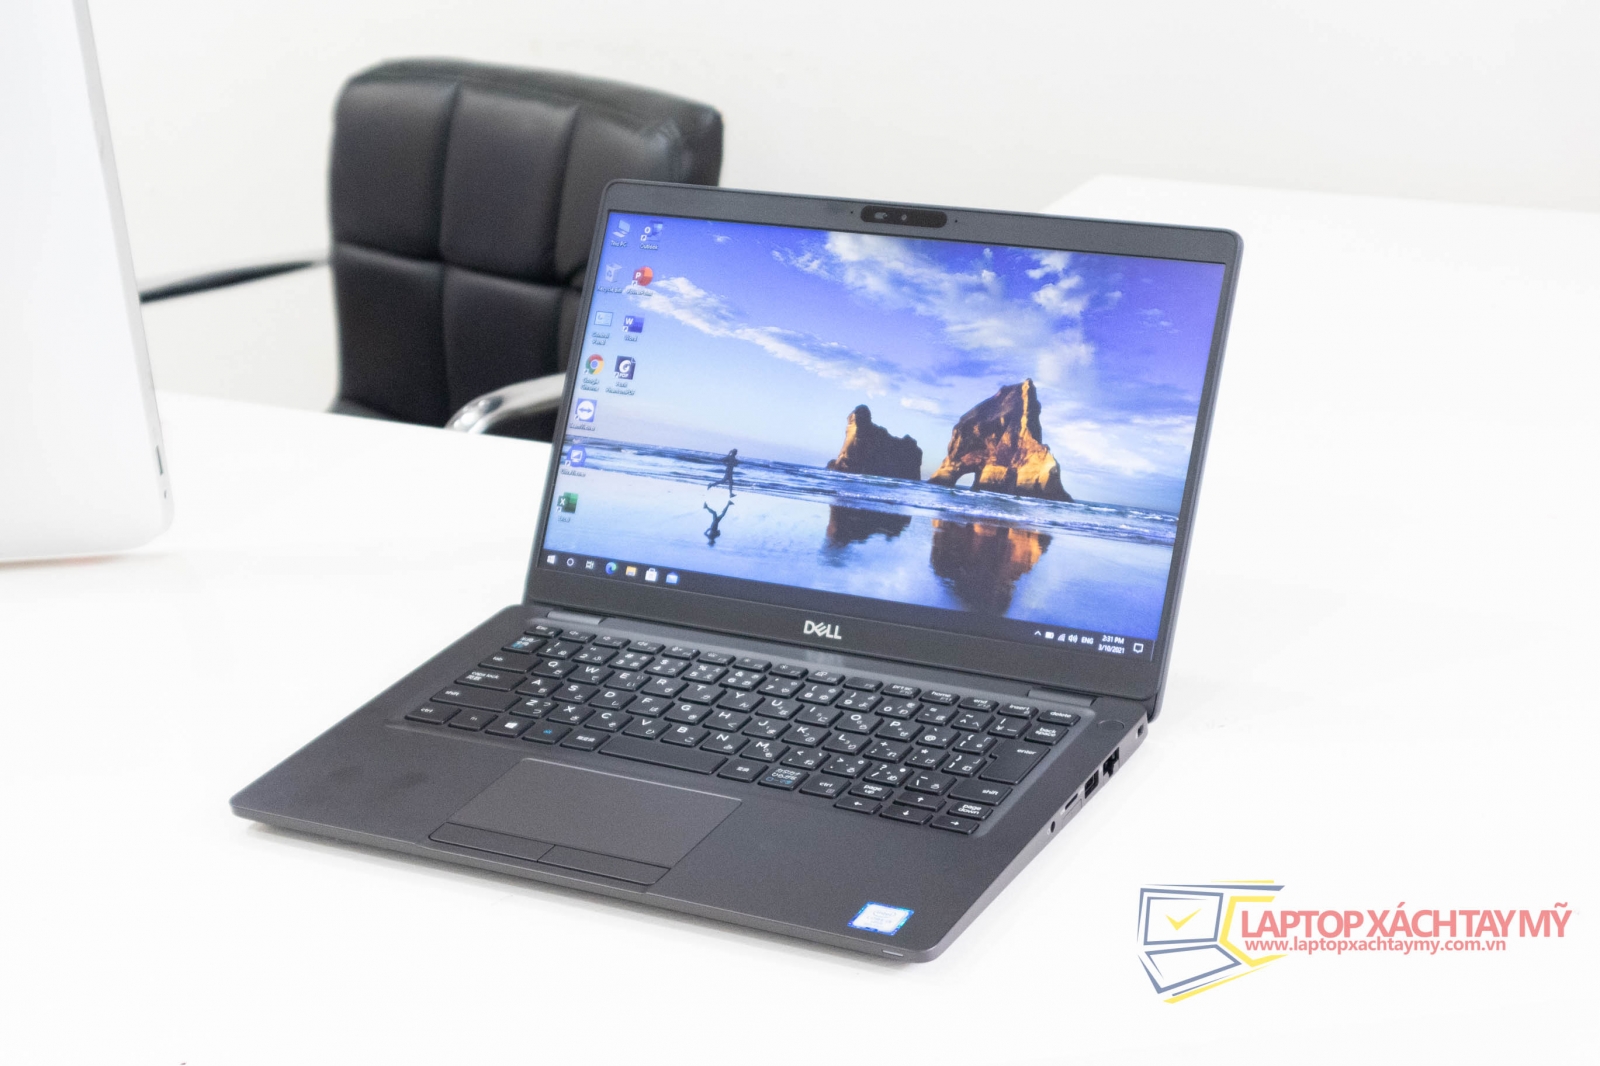 laptop xach tay cu laptop dell latitude tp hcm E5300